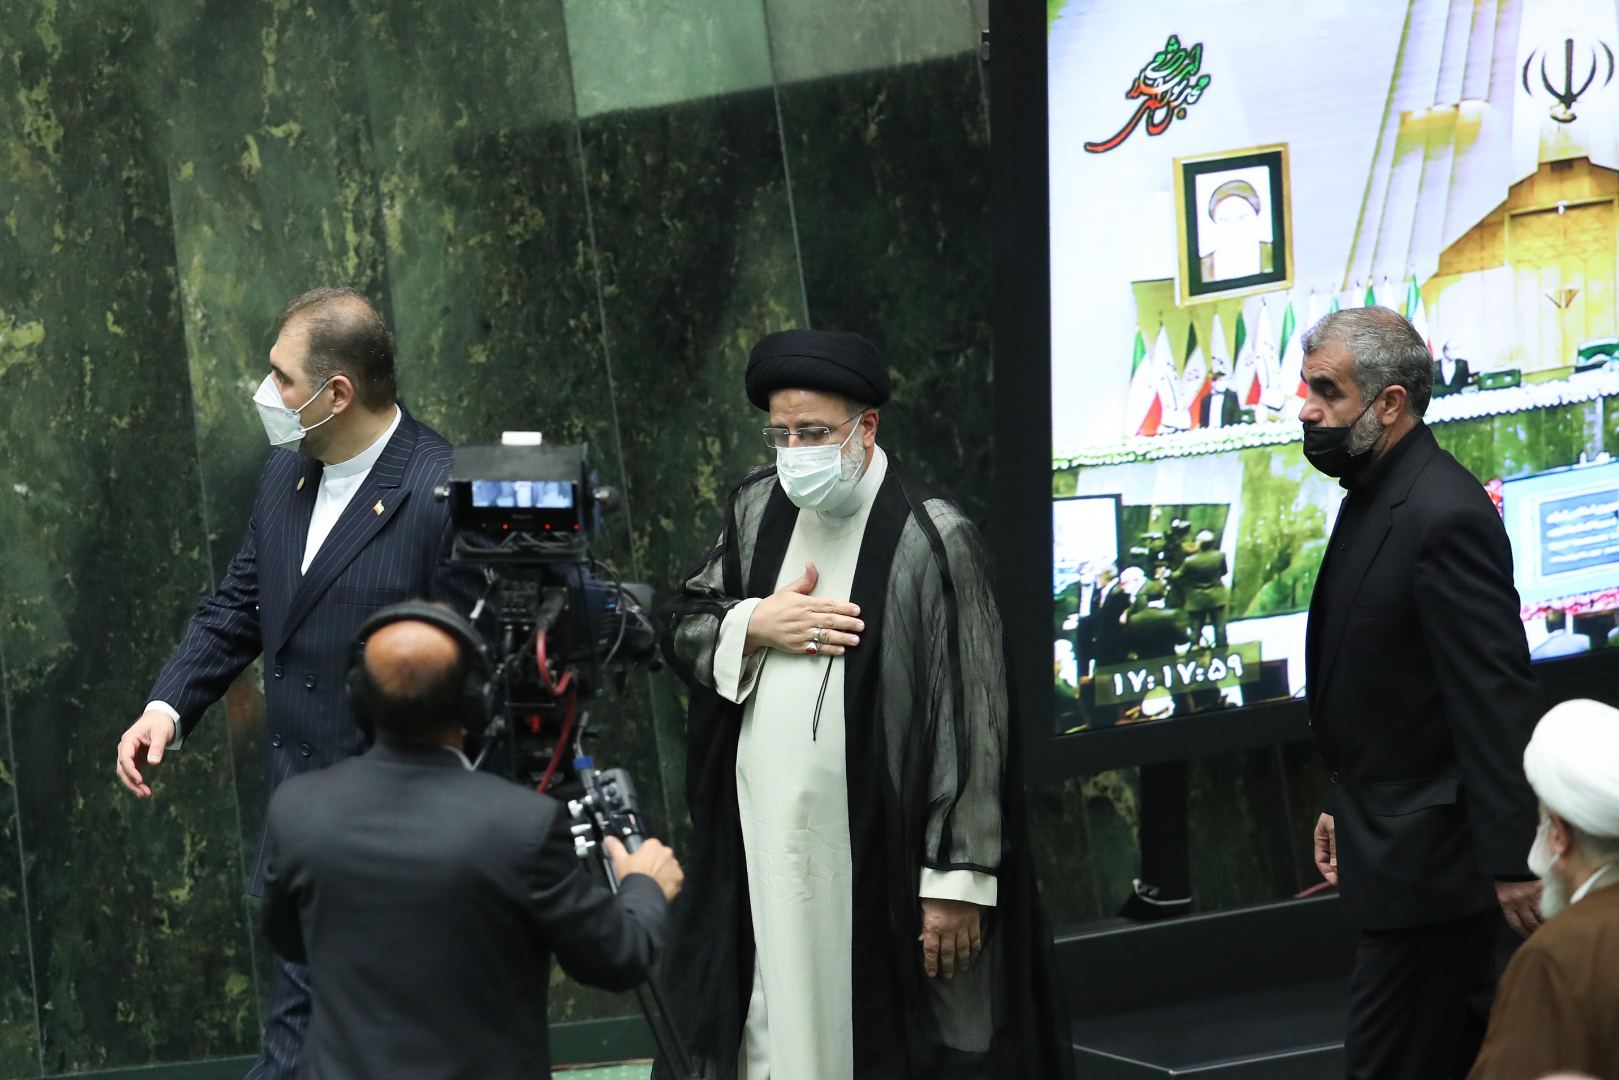 Состоялась инаугурация новоизбранного президента Ирана (ФОТО)